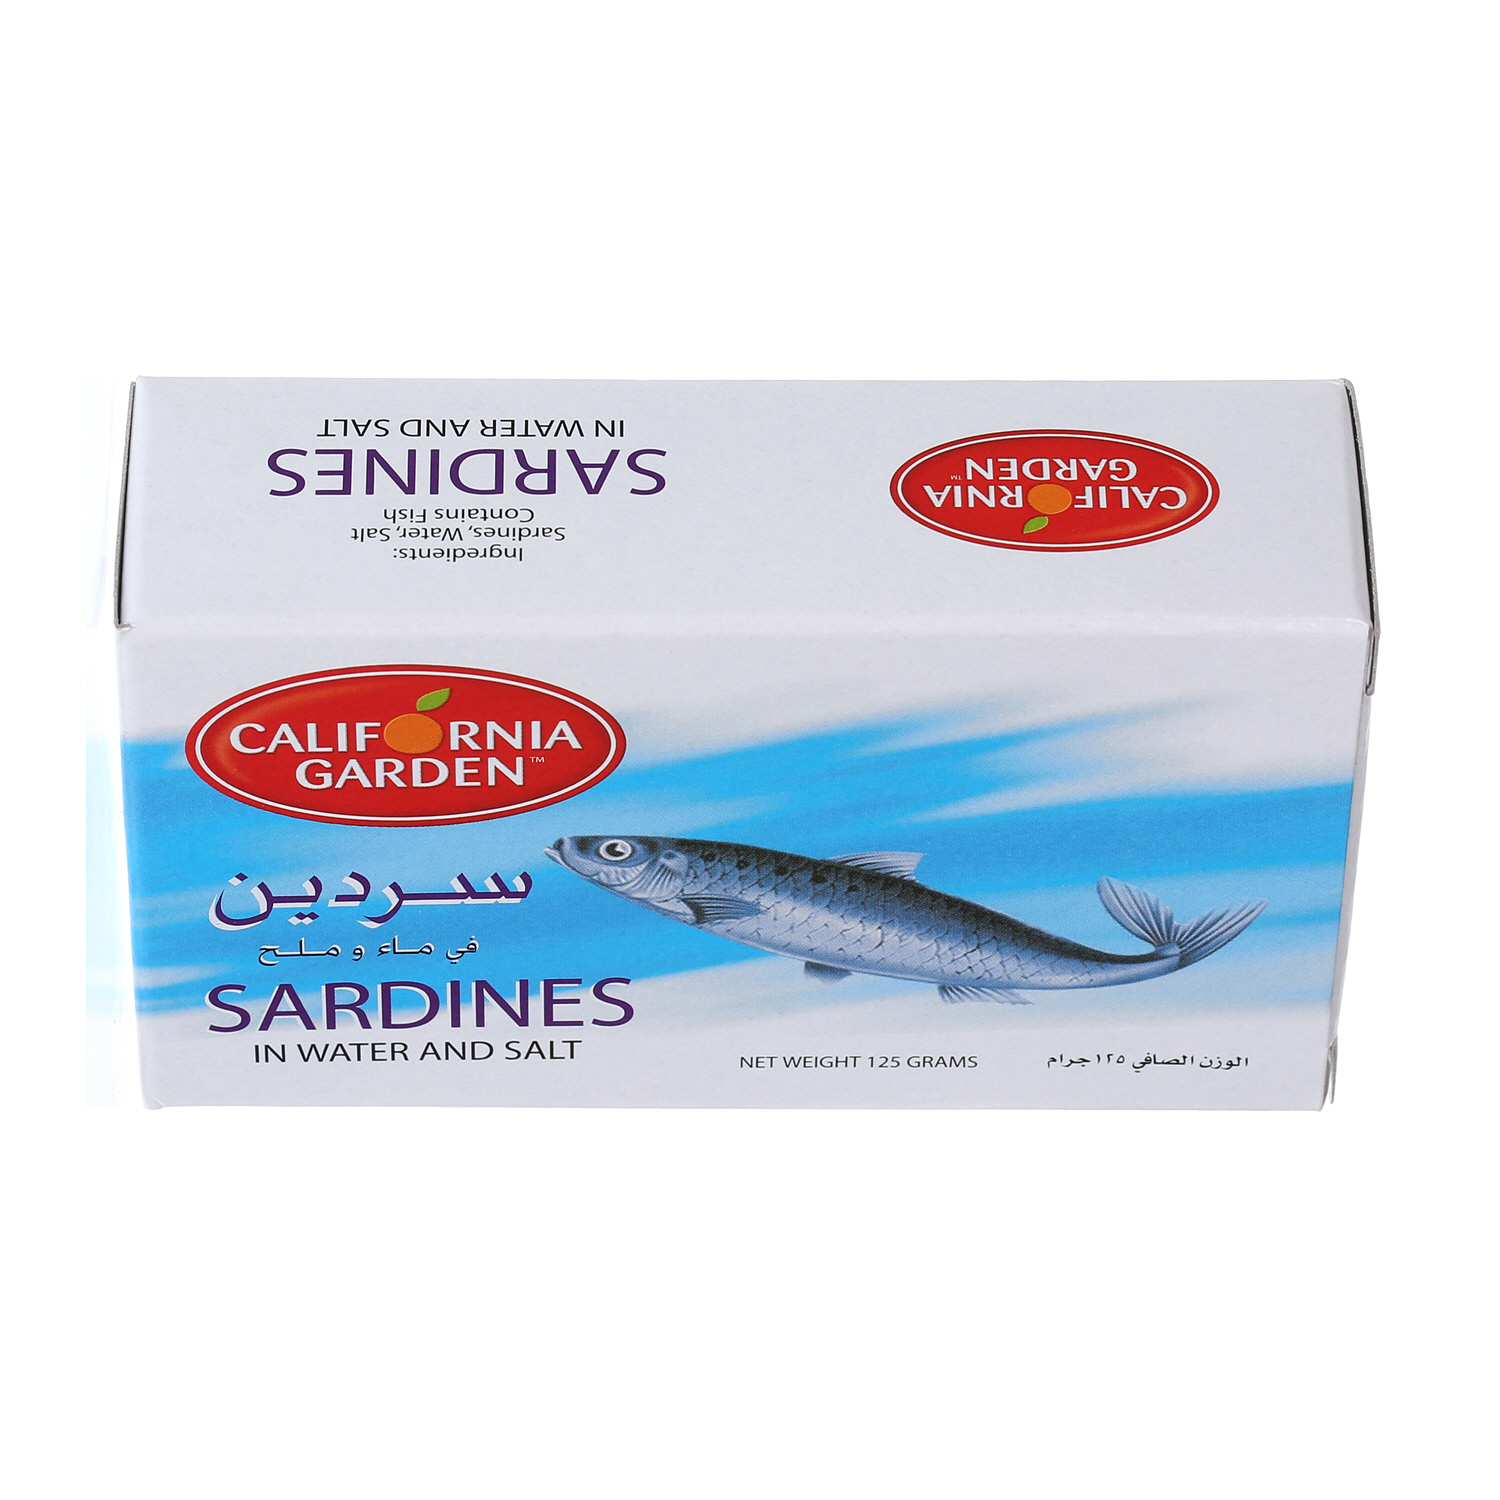 California Garden Sardine In Water & Salt 125 g